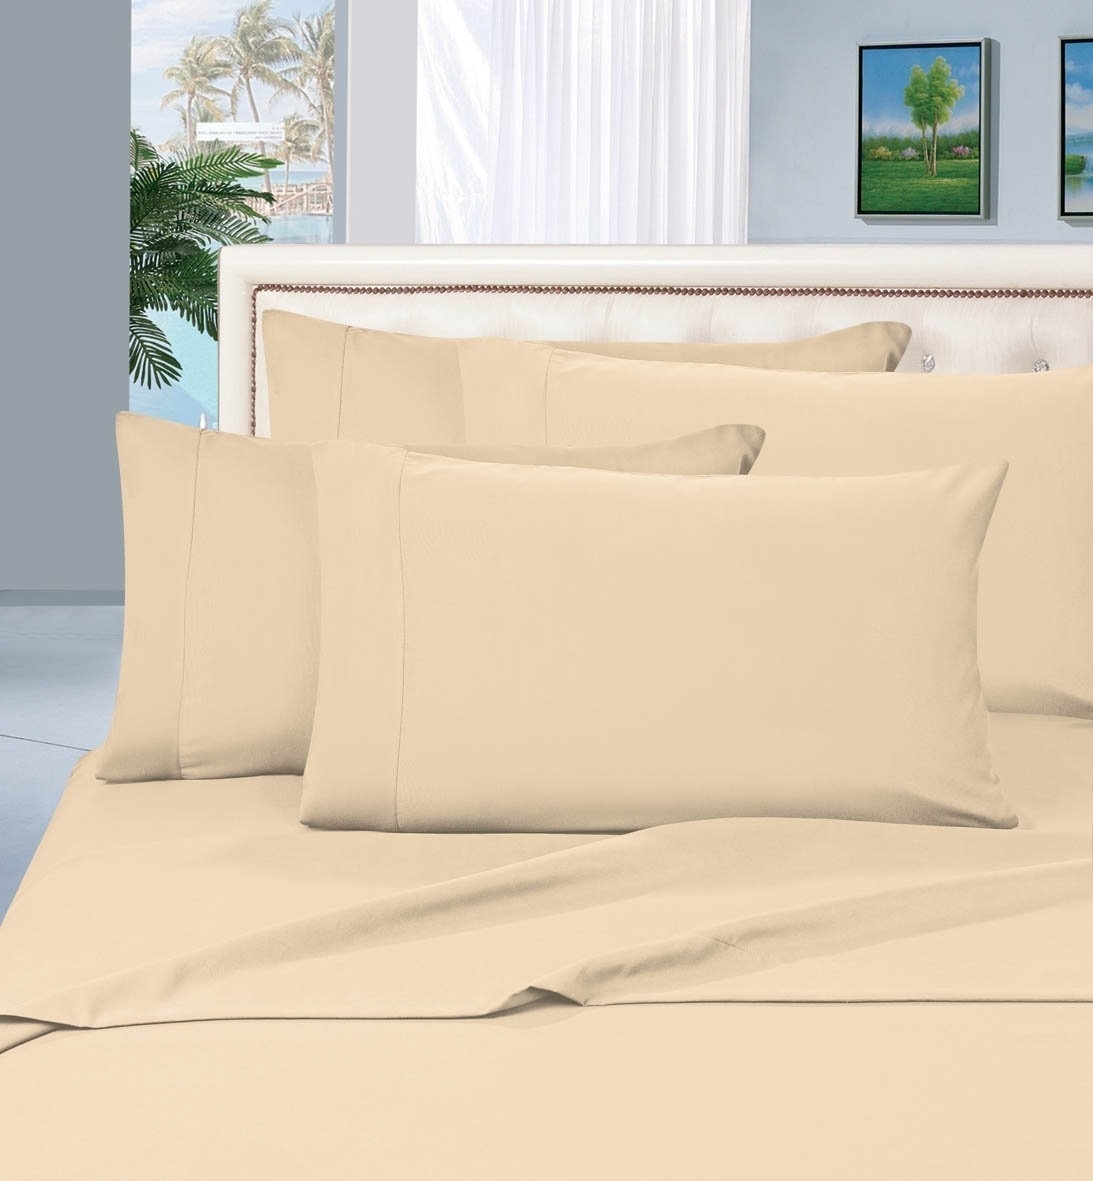 Elegant Comfort 1500 Series Wrinkle Resistant Egyptian Quality Hypoallergenic Ultra Soft Luxury 4-piece Sheet Set, California King, Cream